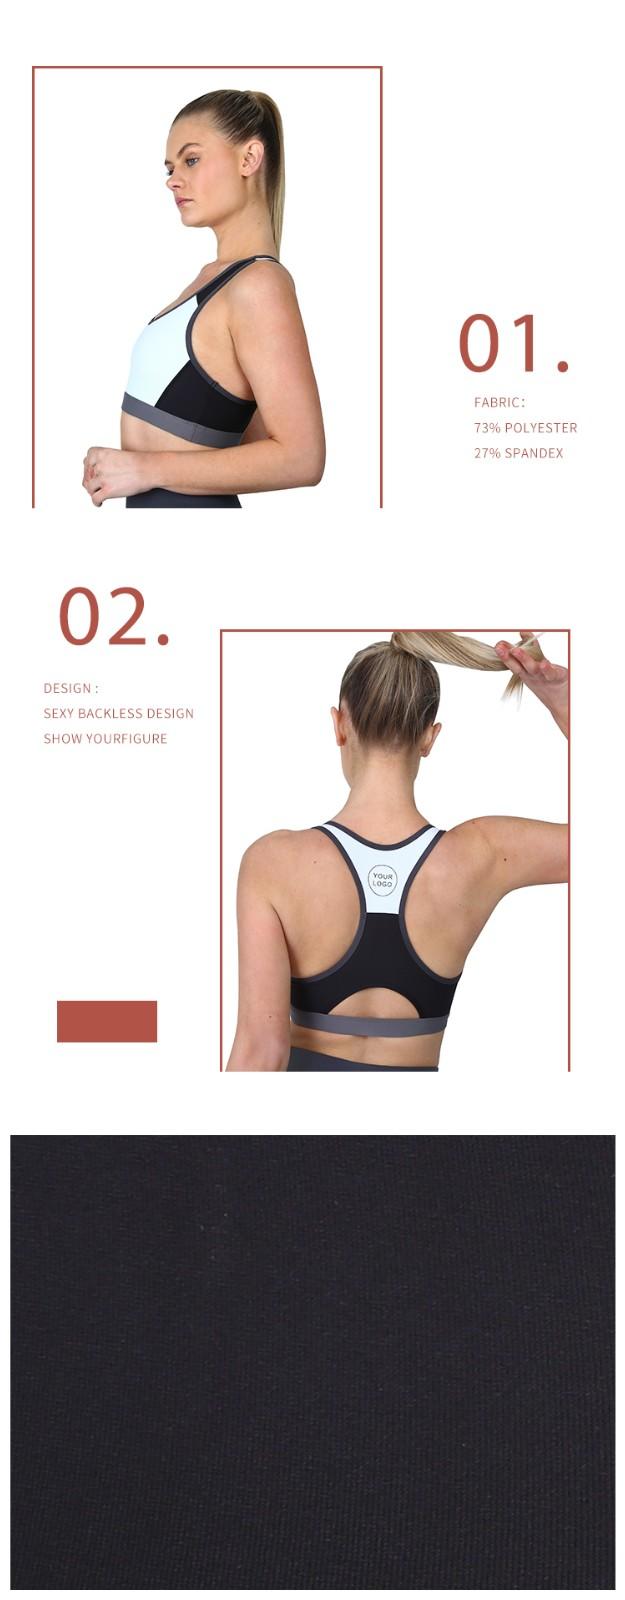 INGOR white bulk sports bras to enhance the capacity of sports at the gym